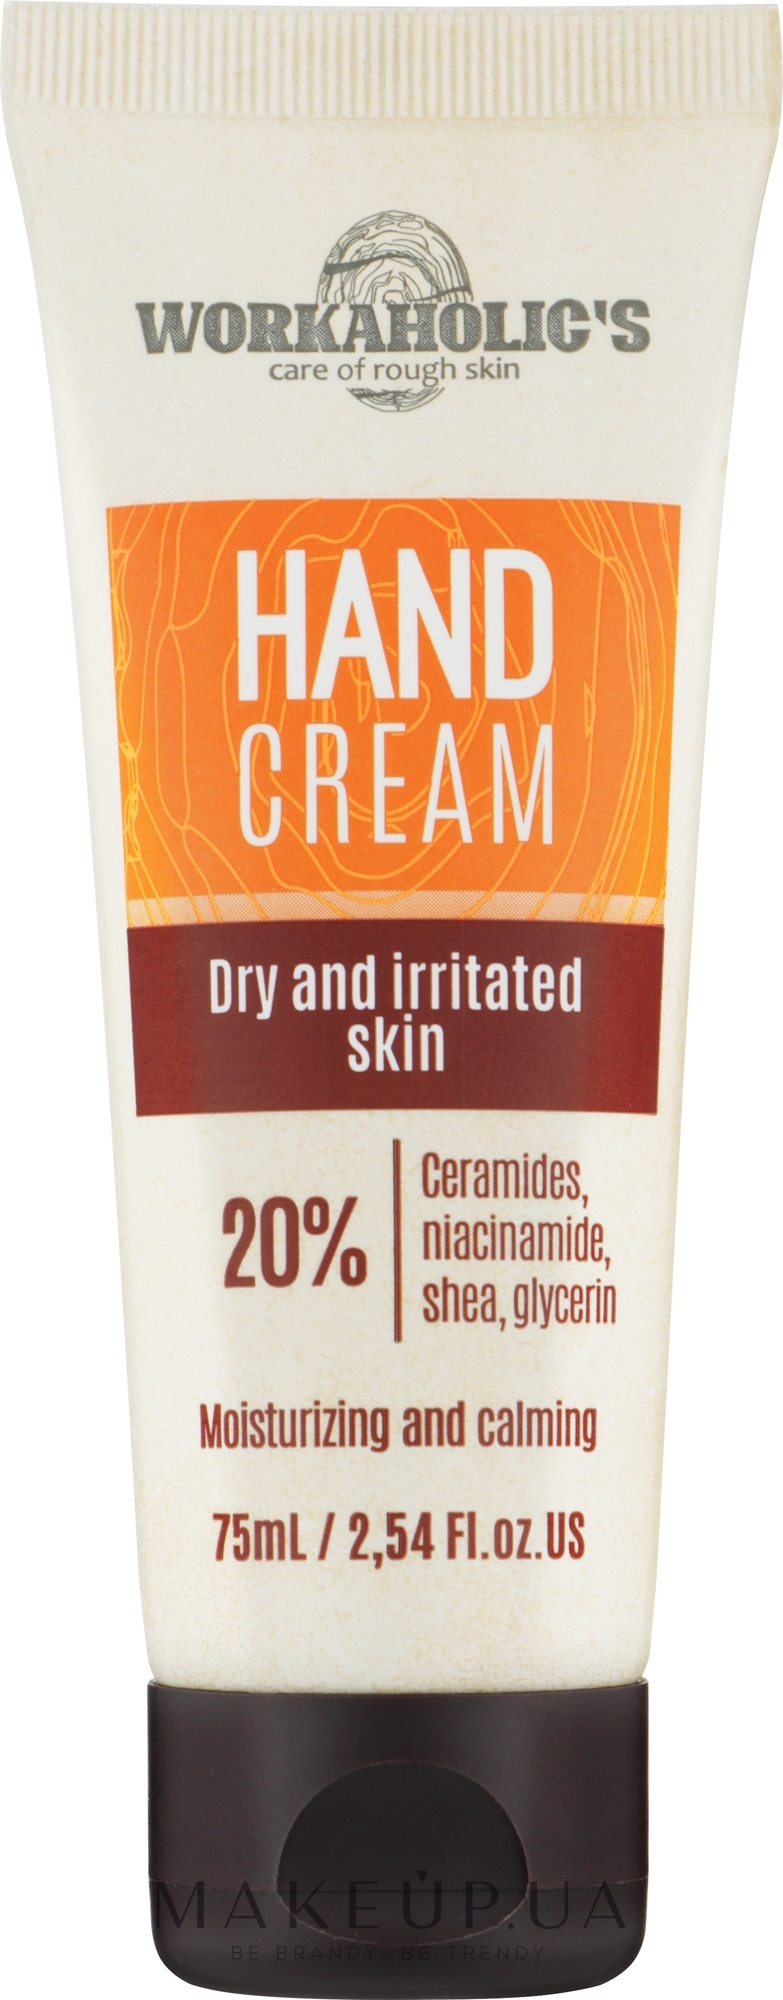 Крем для рук для сухої грубої шкіри - Workaholic's Hand Cream Dry and Irritated Skin 20% — фото 75ml